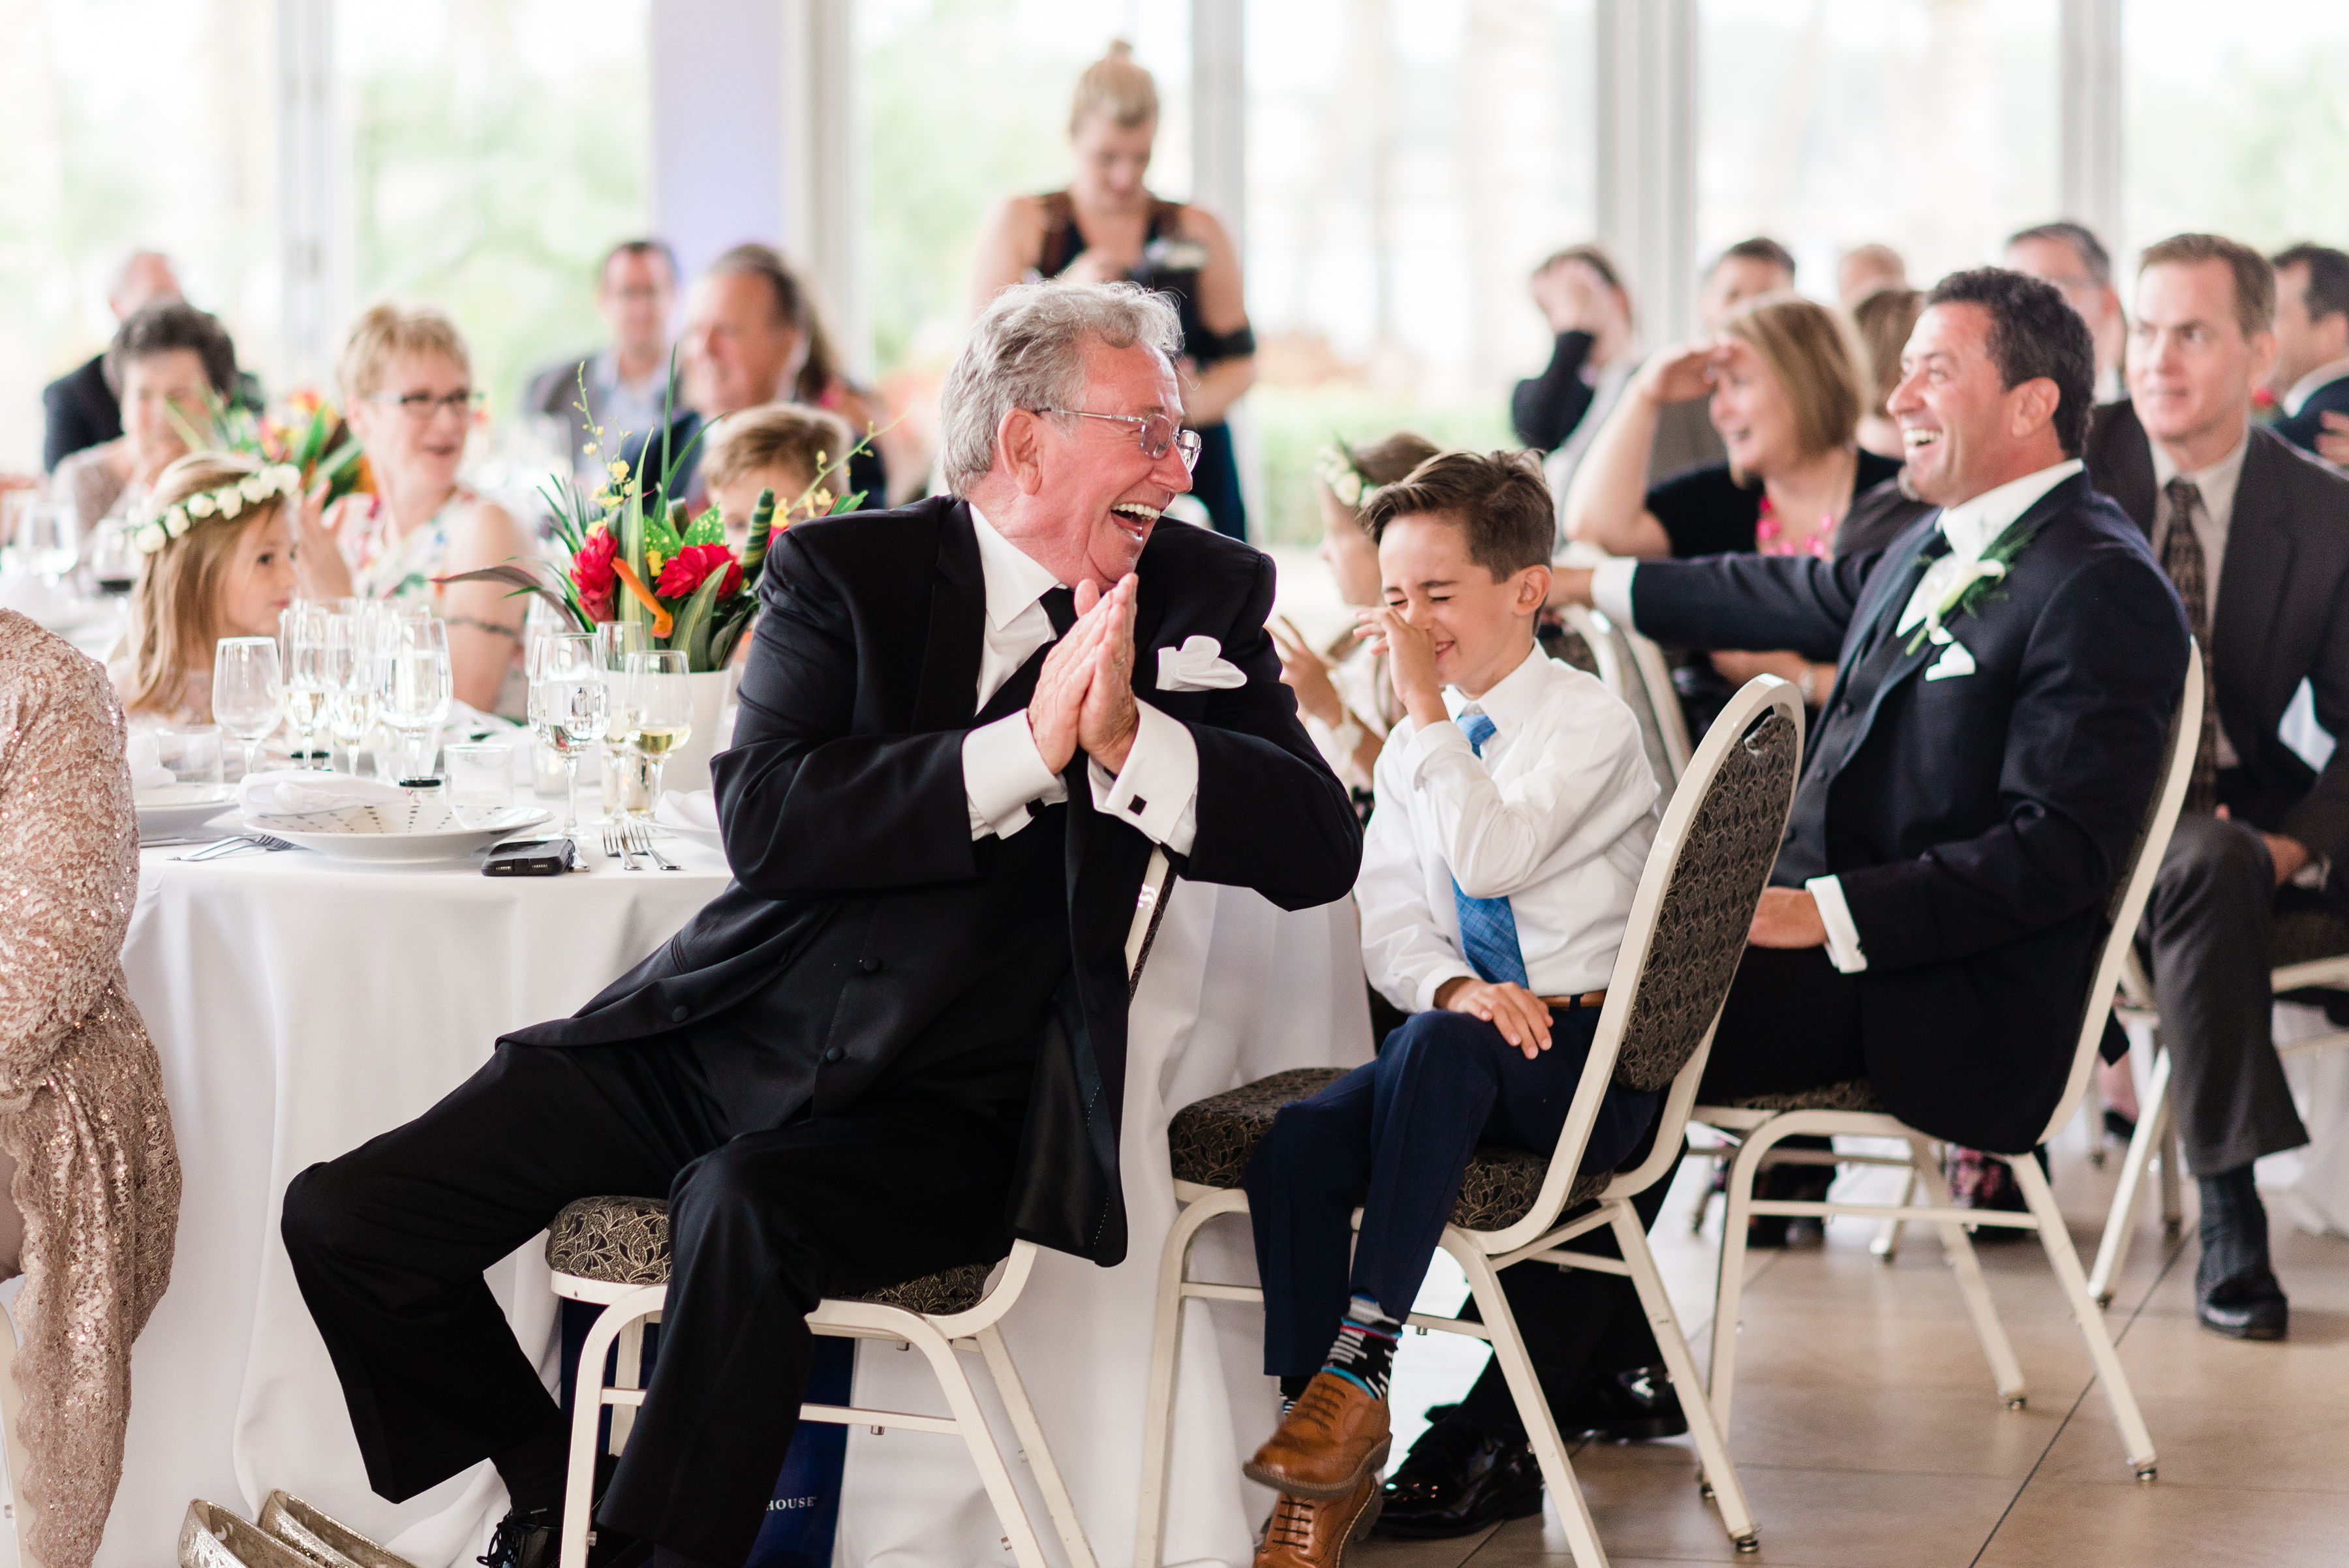 wedding guests enjoying the humorous toast